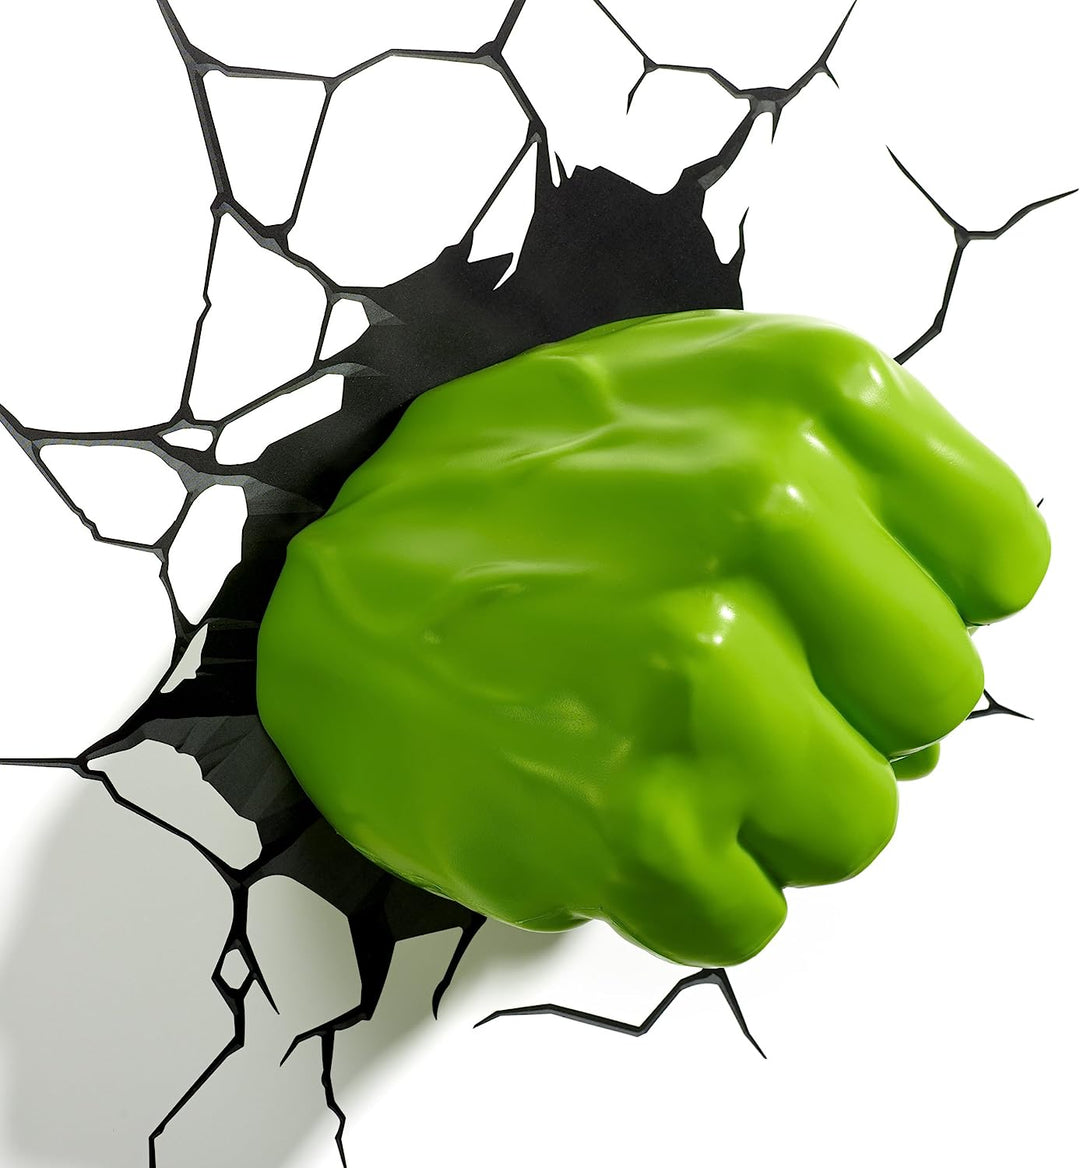 Marvel Hulk Hand 3D Wall-Mounted Deco Light